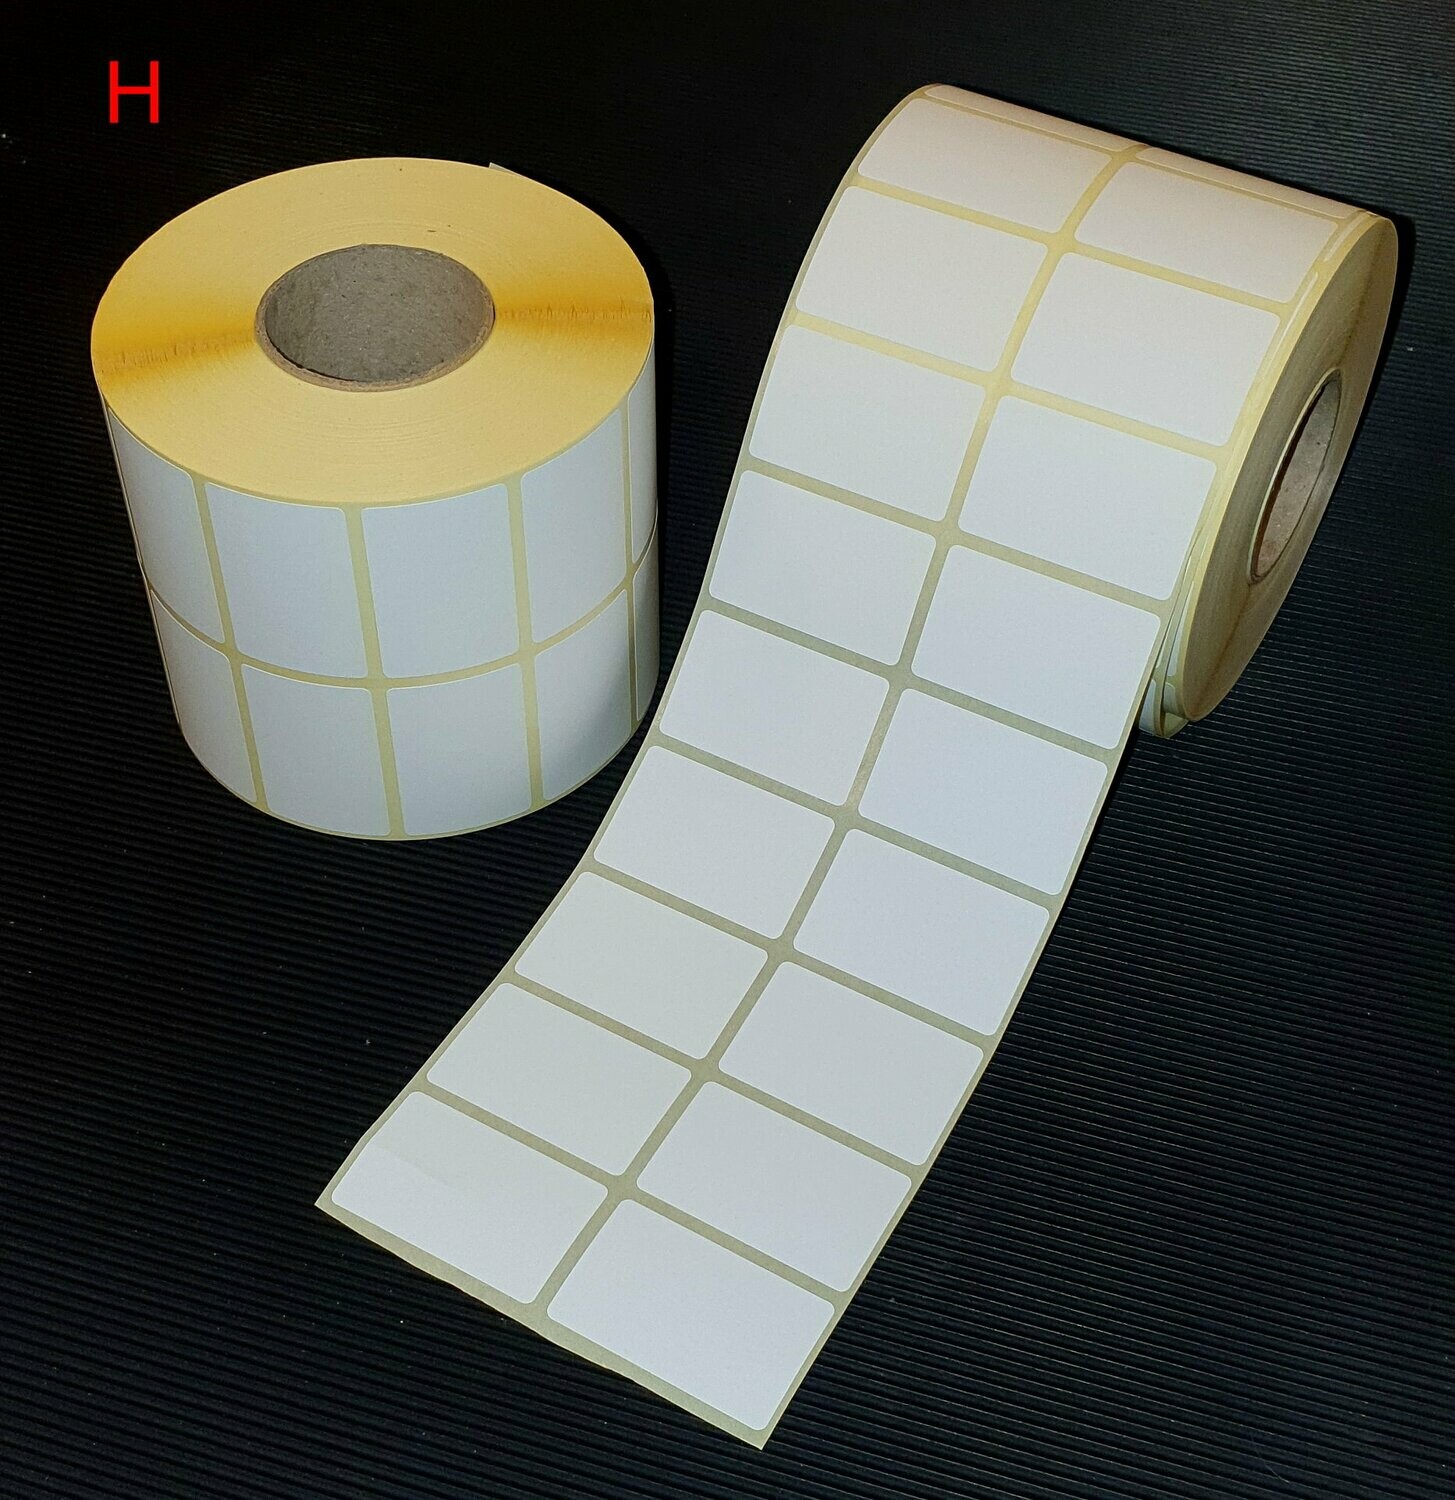 Labelprinterstickers (enkel) thermo top (H) XL